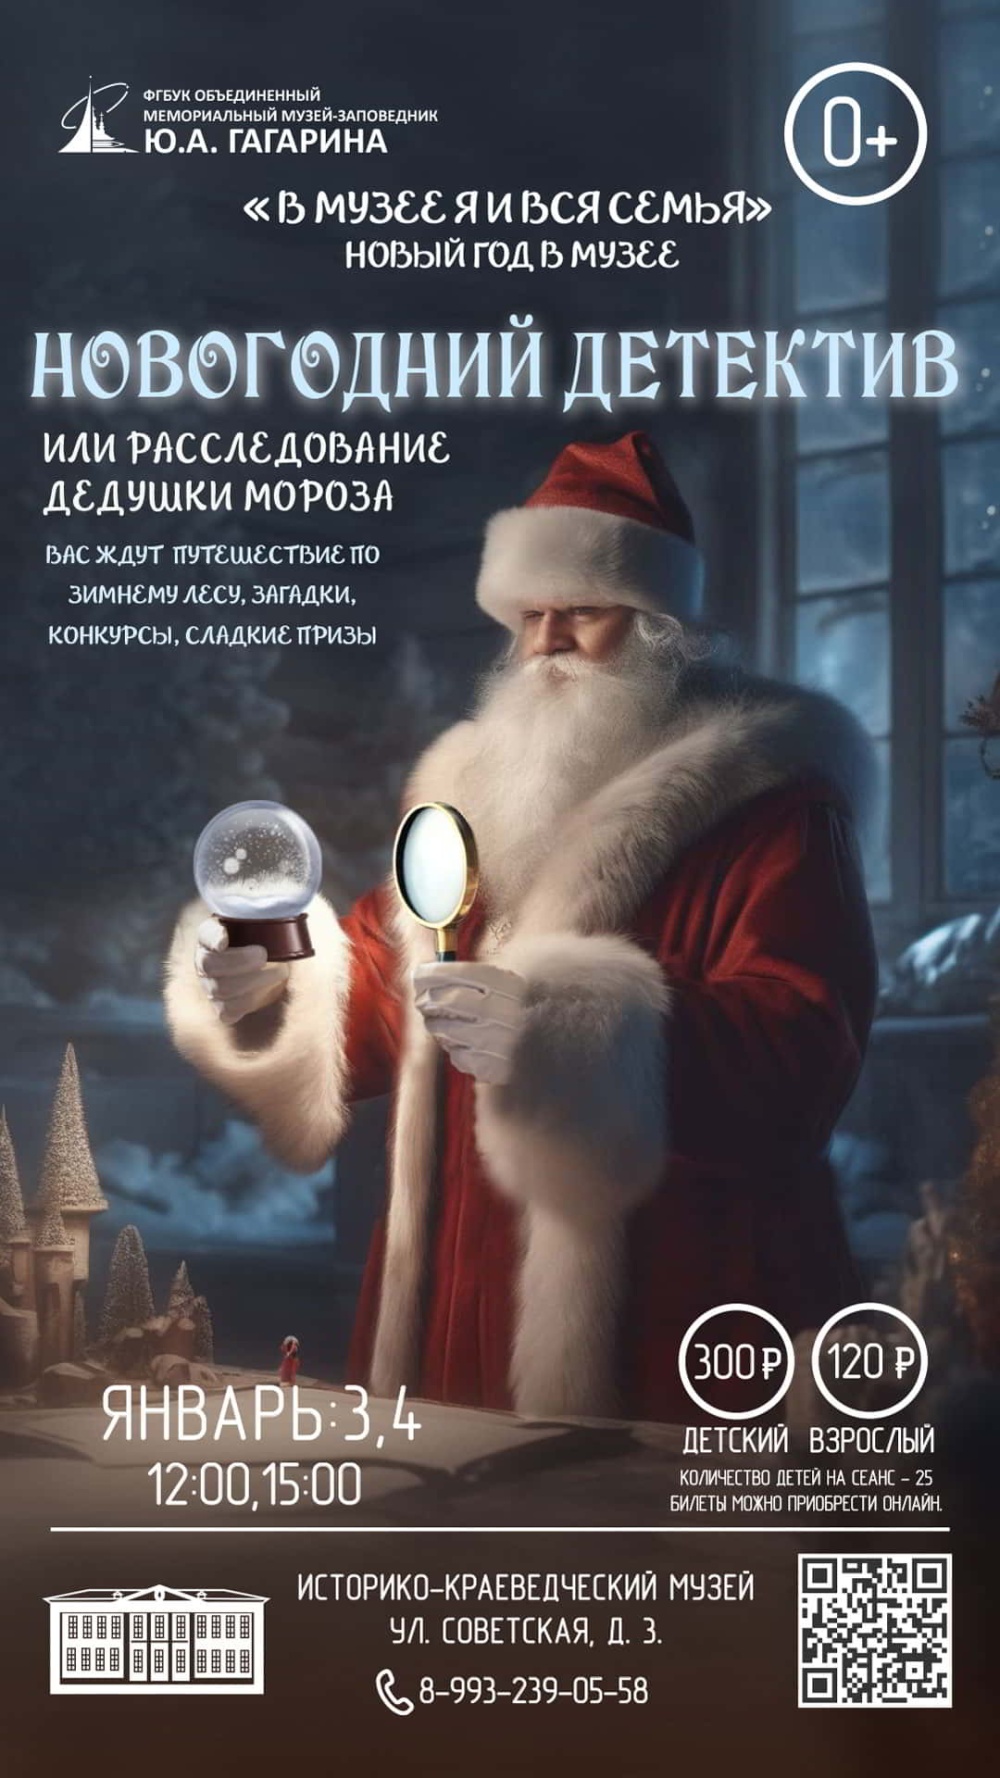 Новогодний детектив или Расследование Дедушки Мороза